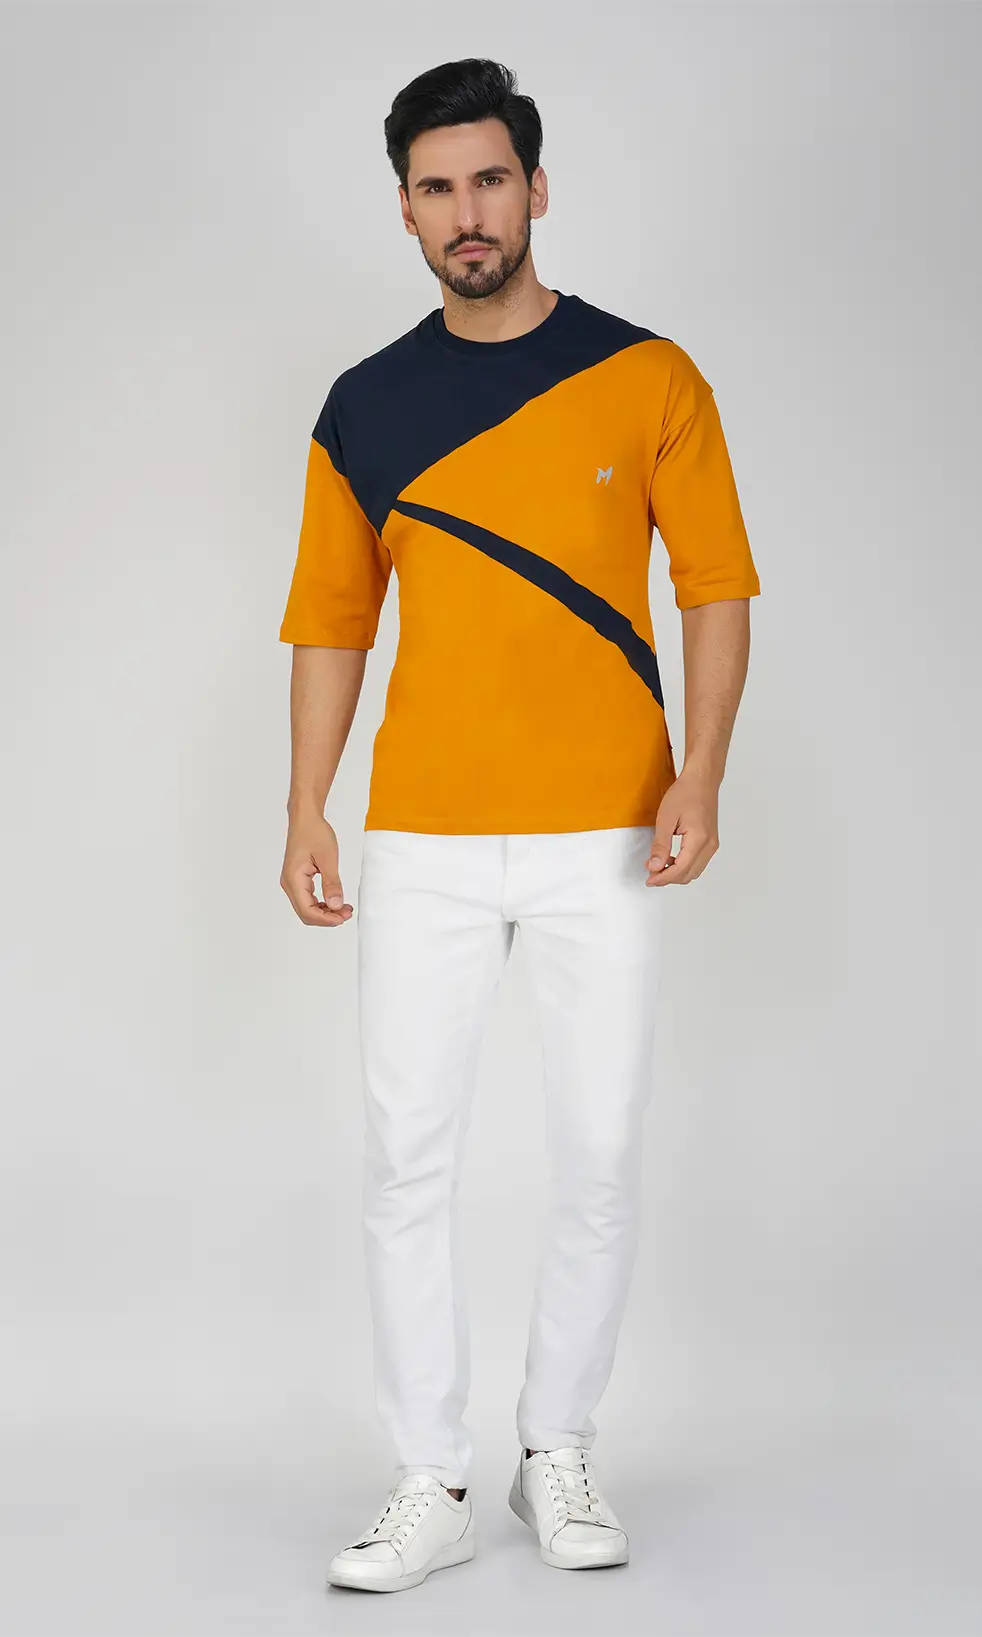 Mebadass Men's ColorBlocked OverSized Cotton T-shirts - Mustard & Navy